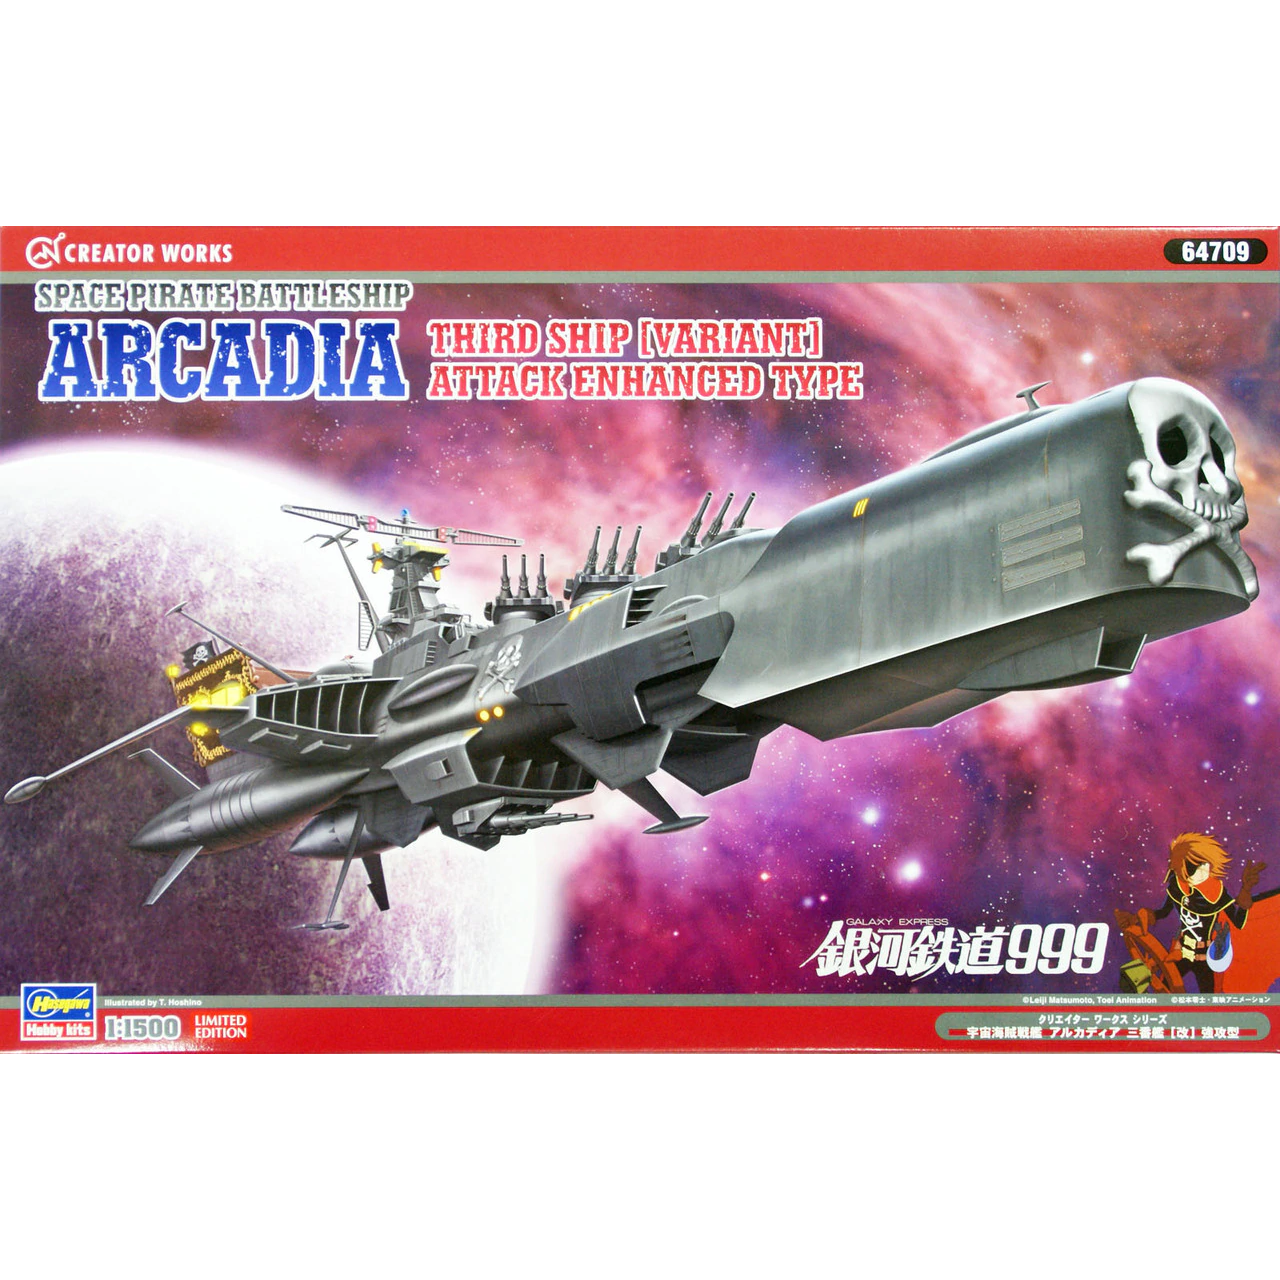 Space Battleship Arcadia 1/1500 Captain Harlock Model Kit #64505 by Hasegawa